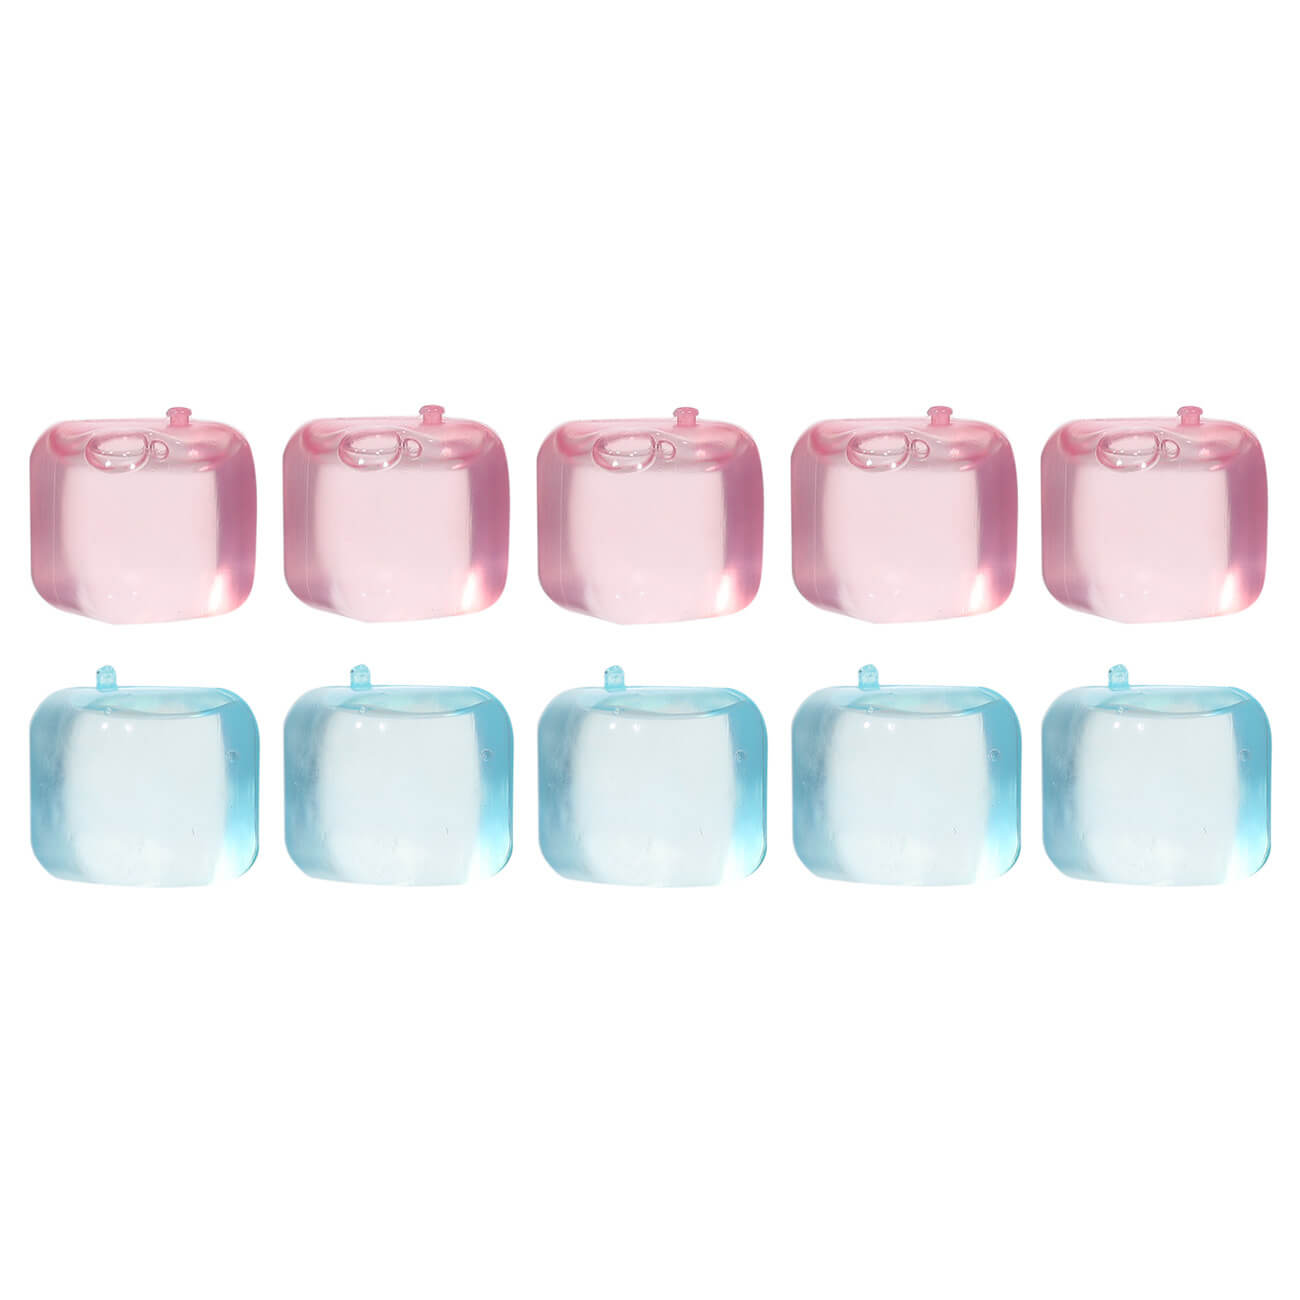 Набор кубиков для охлаждения напитков, 10 шт, пластик, розовый/голубой, Dolce Vita шлем vz20 f26k 001 venzo розовый rhevz20f26k2